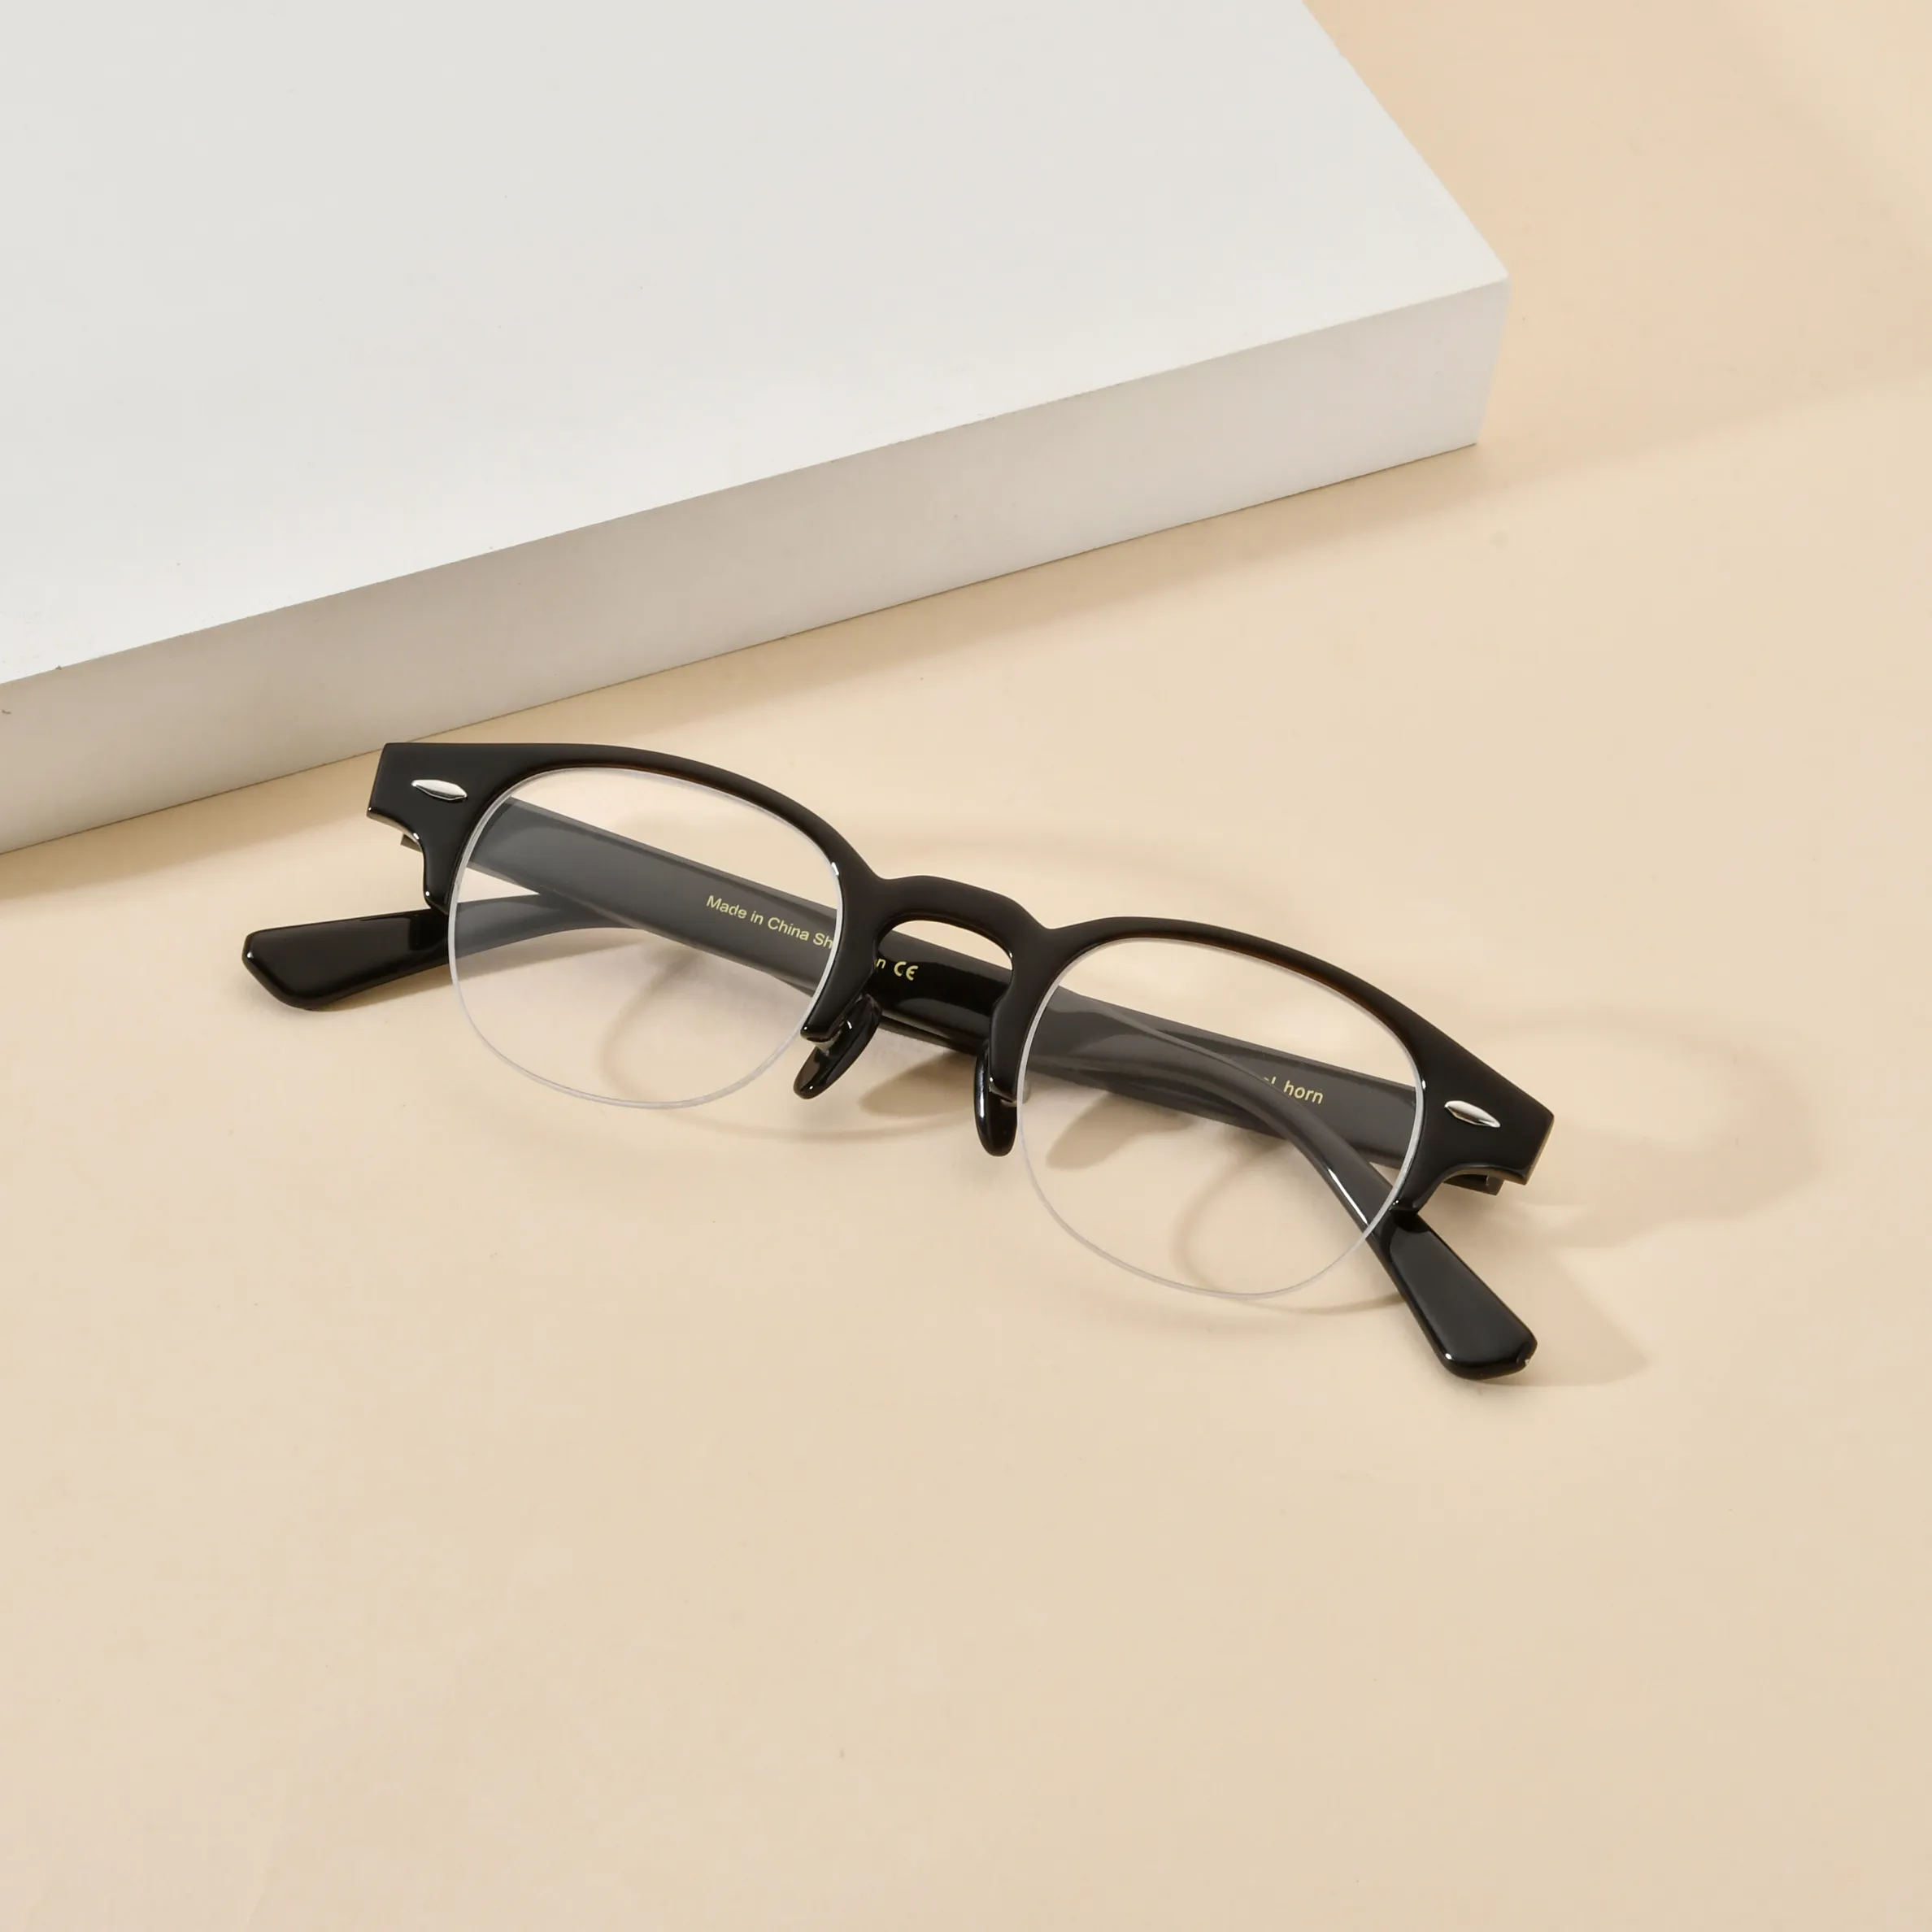 New Arrival Most Popular Optical Glasses Browlines Black Gold Silver Glasses Eyewear Eyeglasses Frames